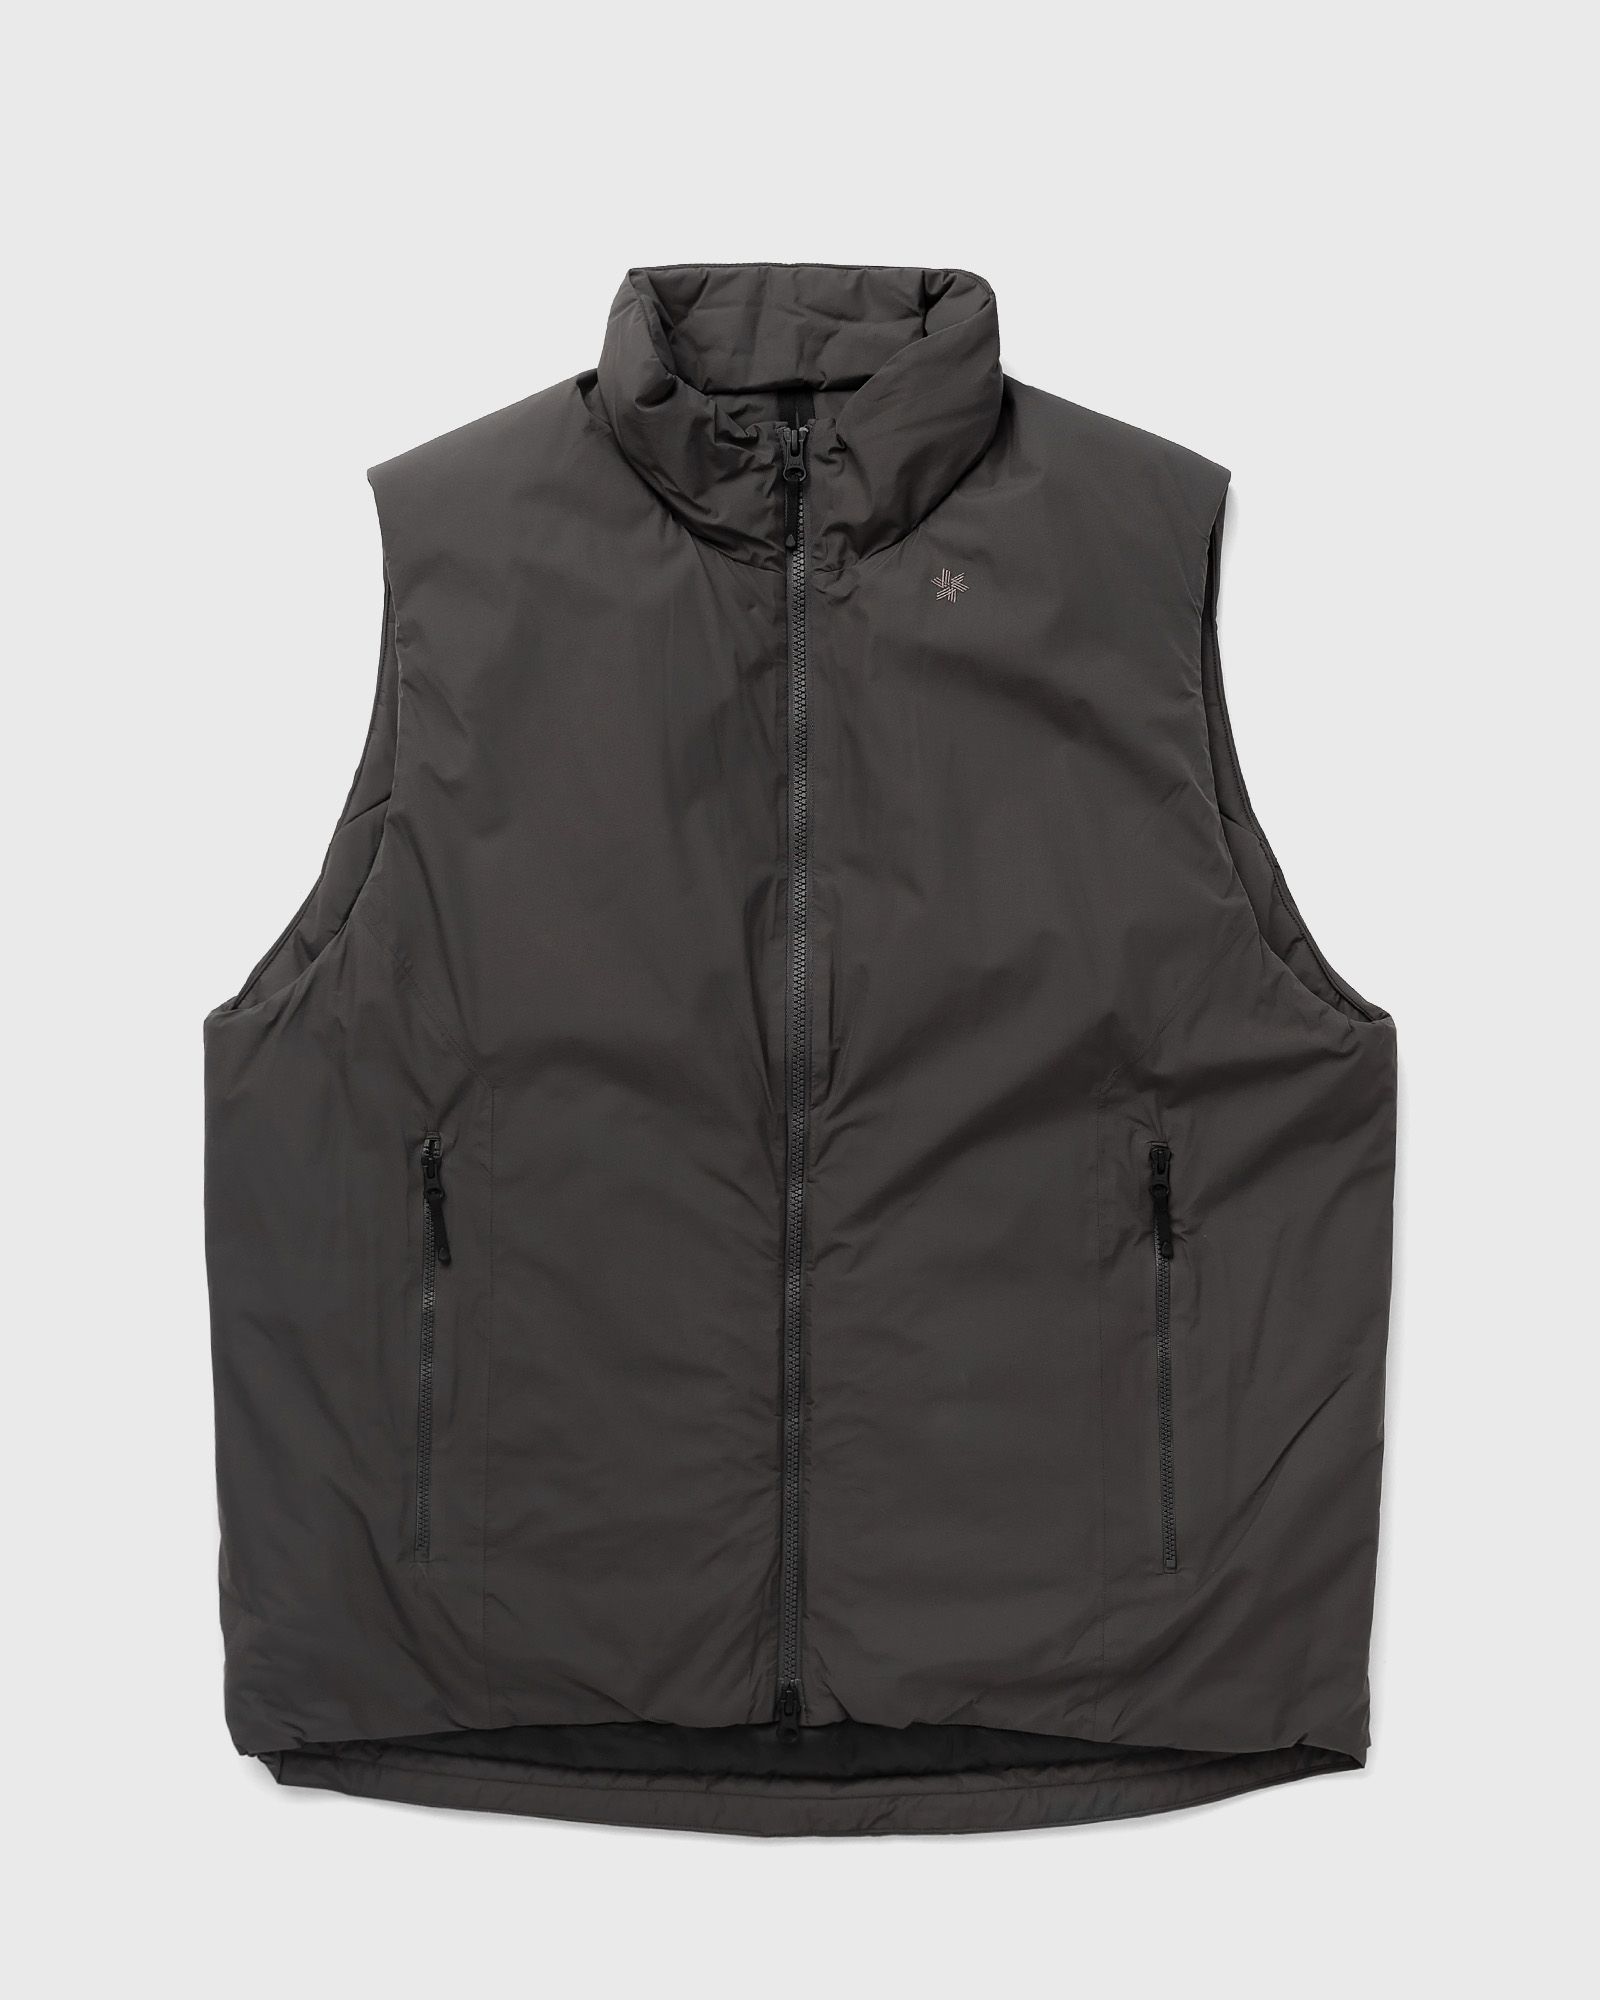 Goldwin - gore-tex windstopper puffy mil vest men vests green in größe:s